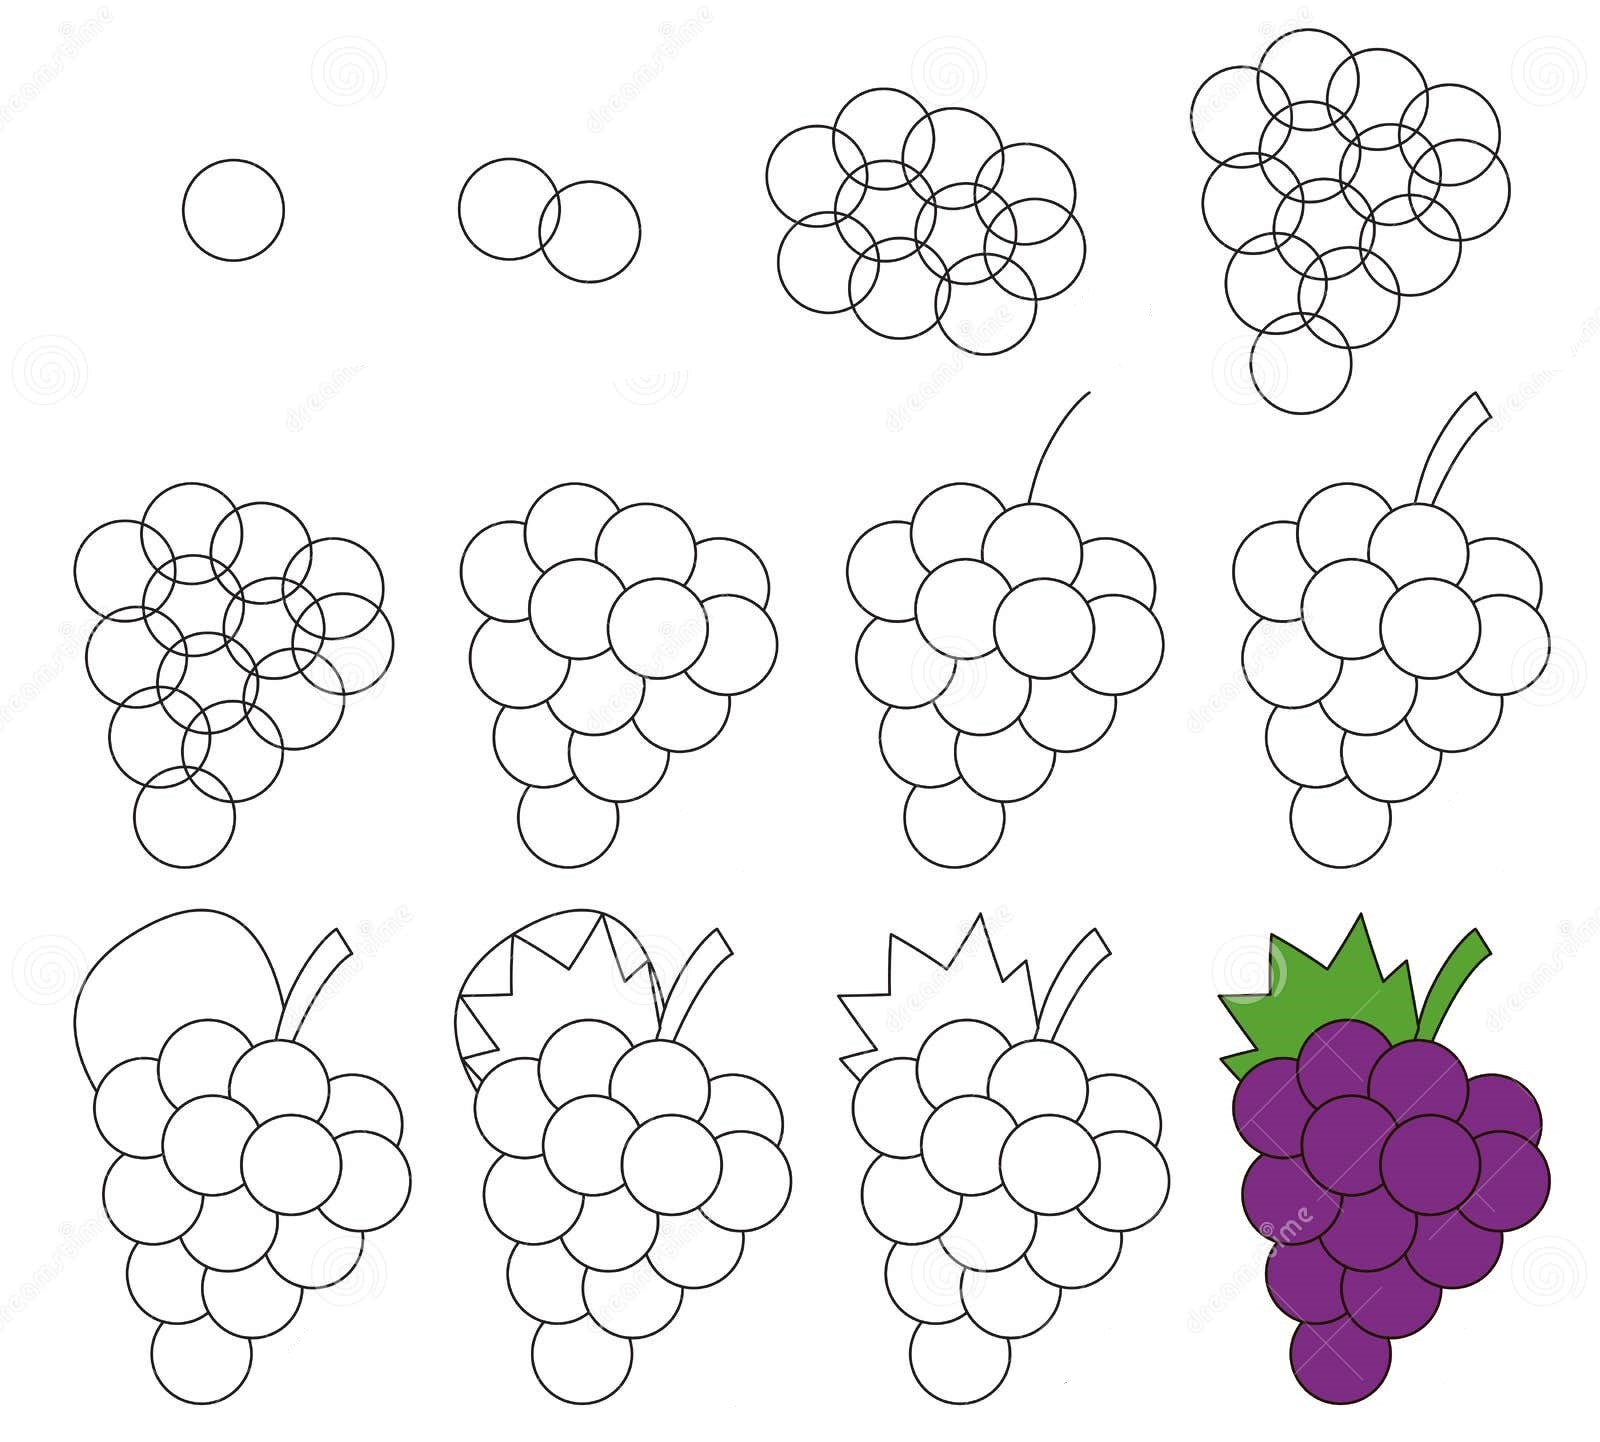 Idée grappe de raisin (8) dessin